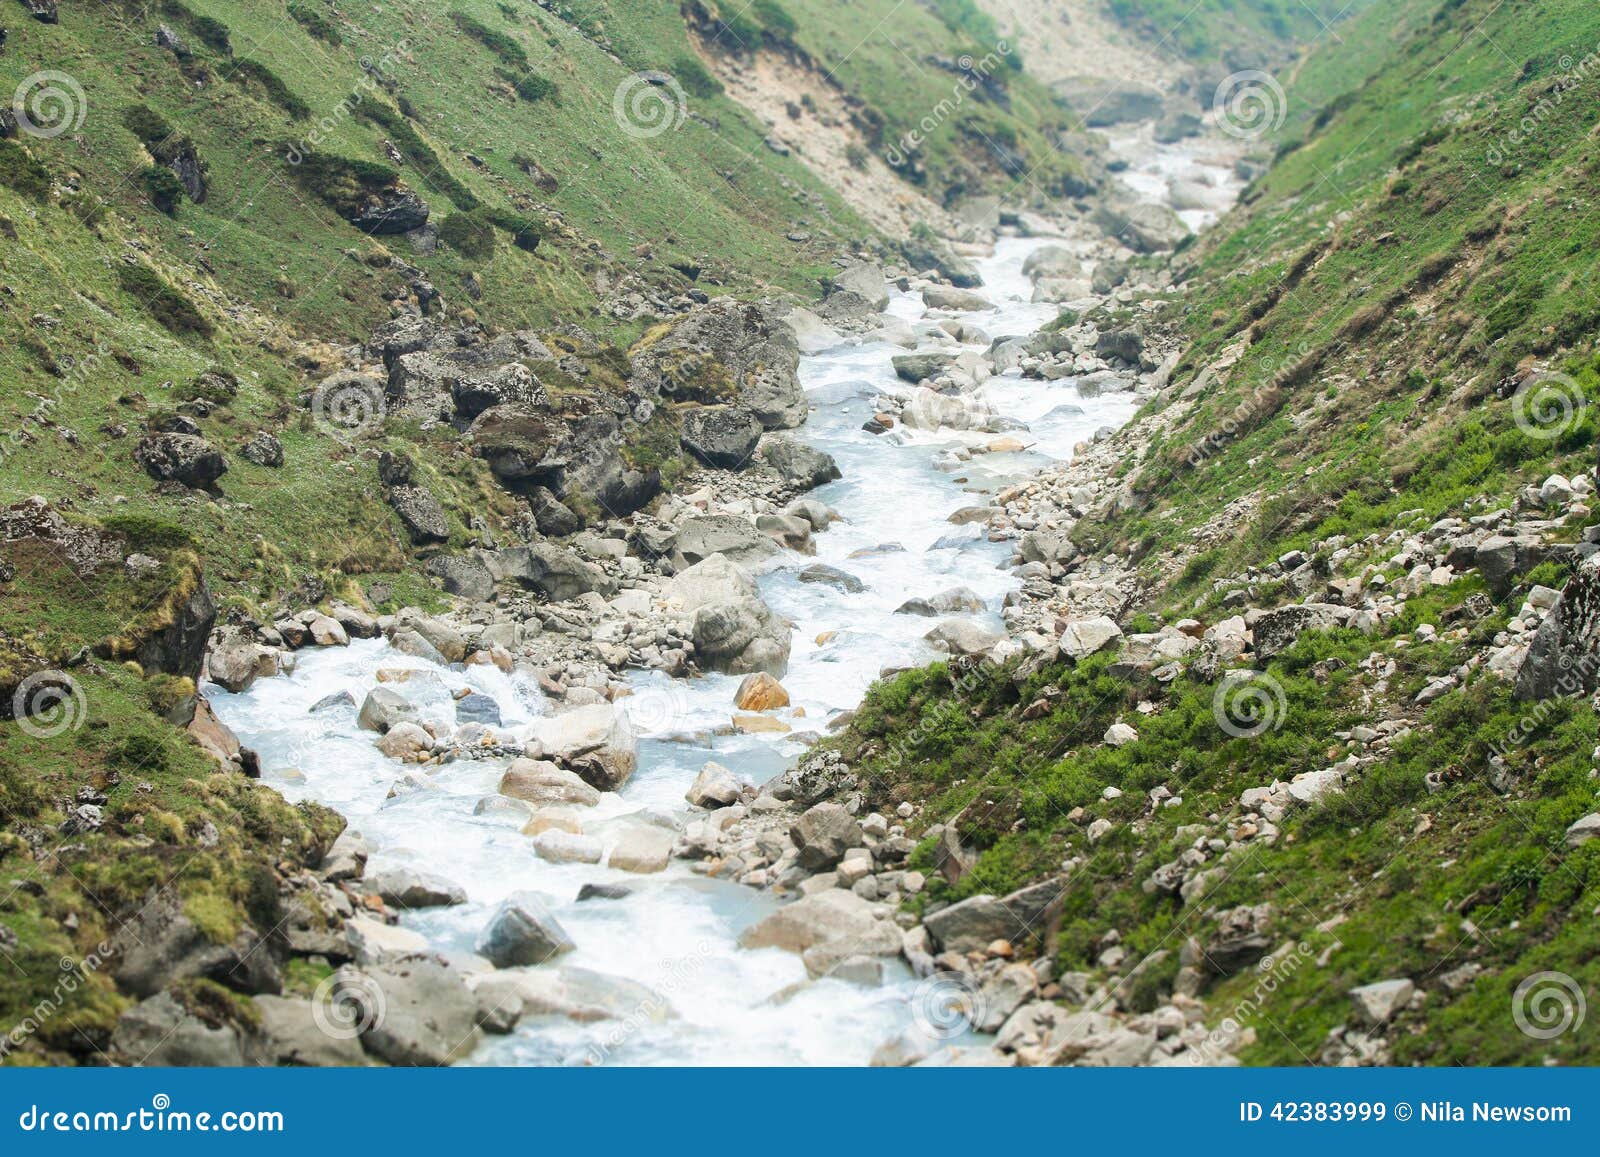 Mandakini River. Stock Image. Image Of Environment, Alaknanda - 42383999